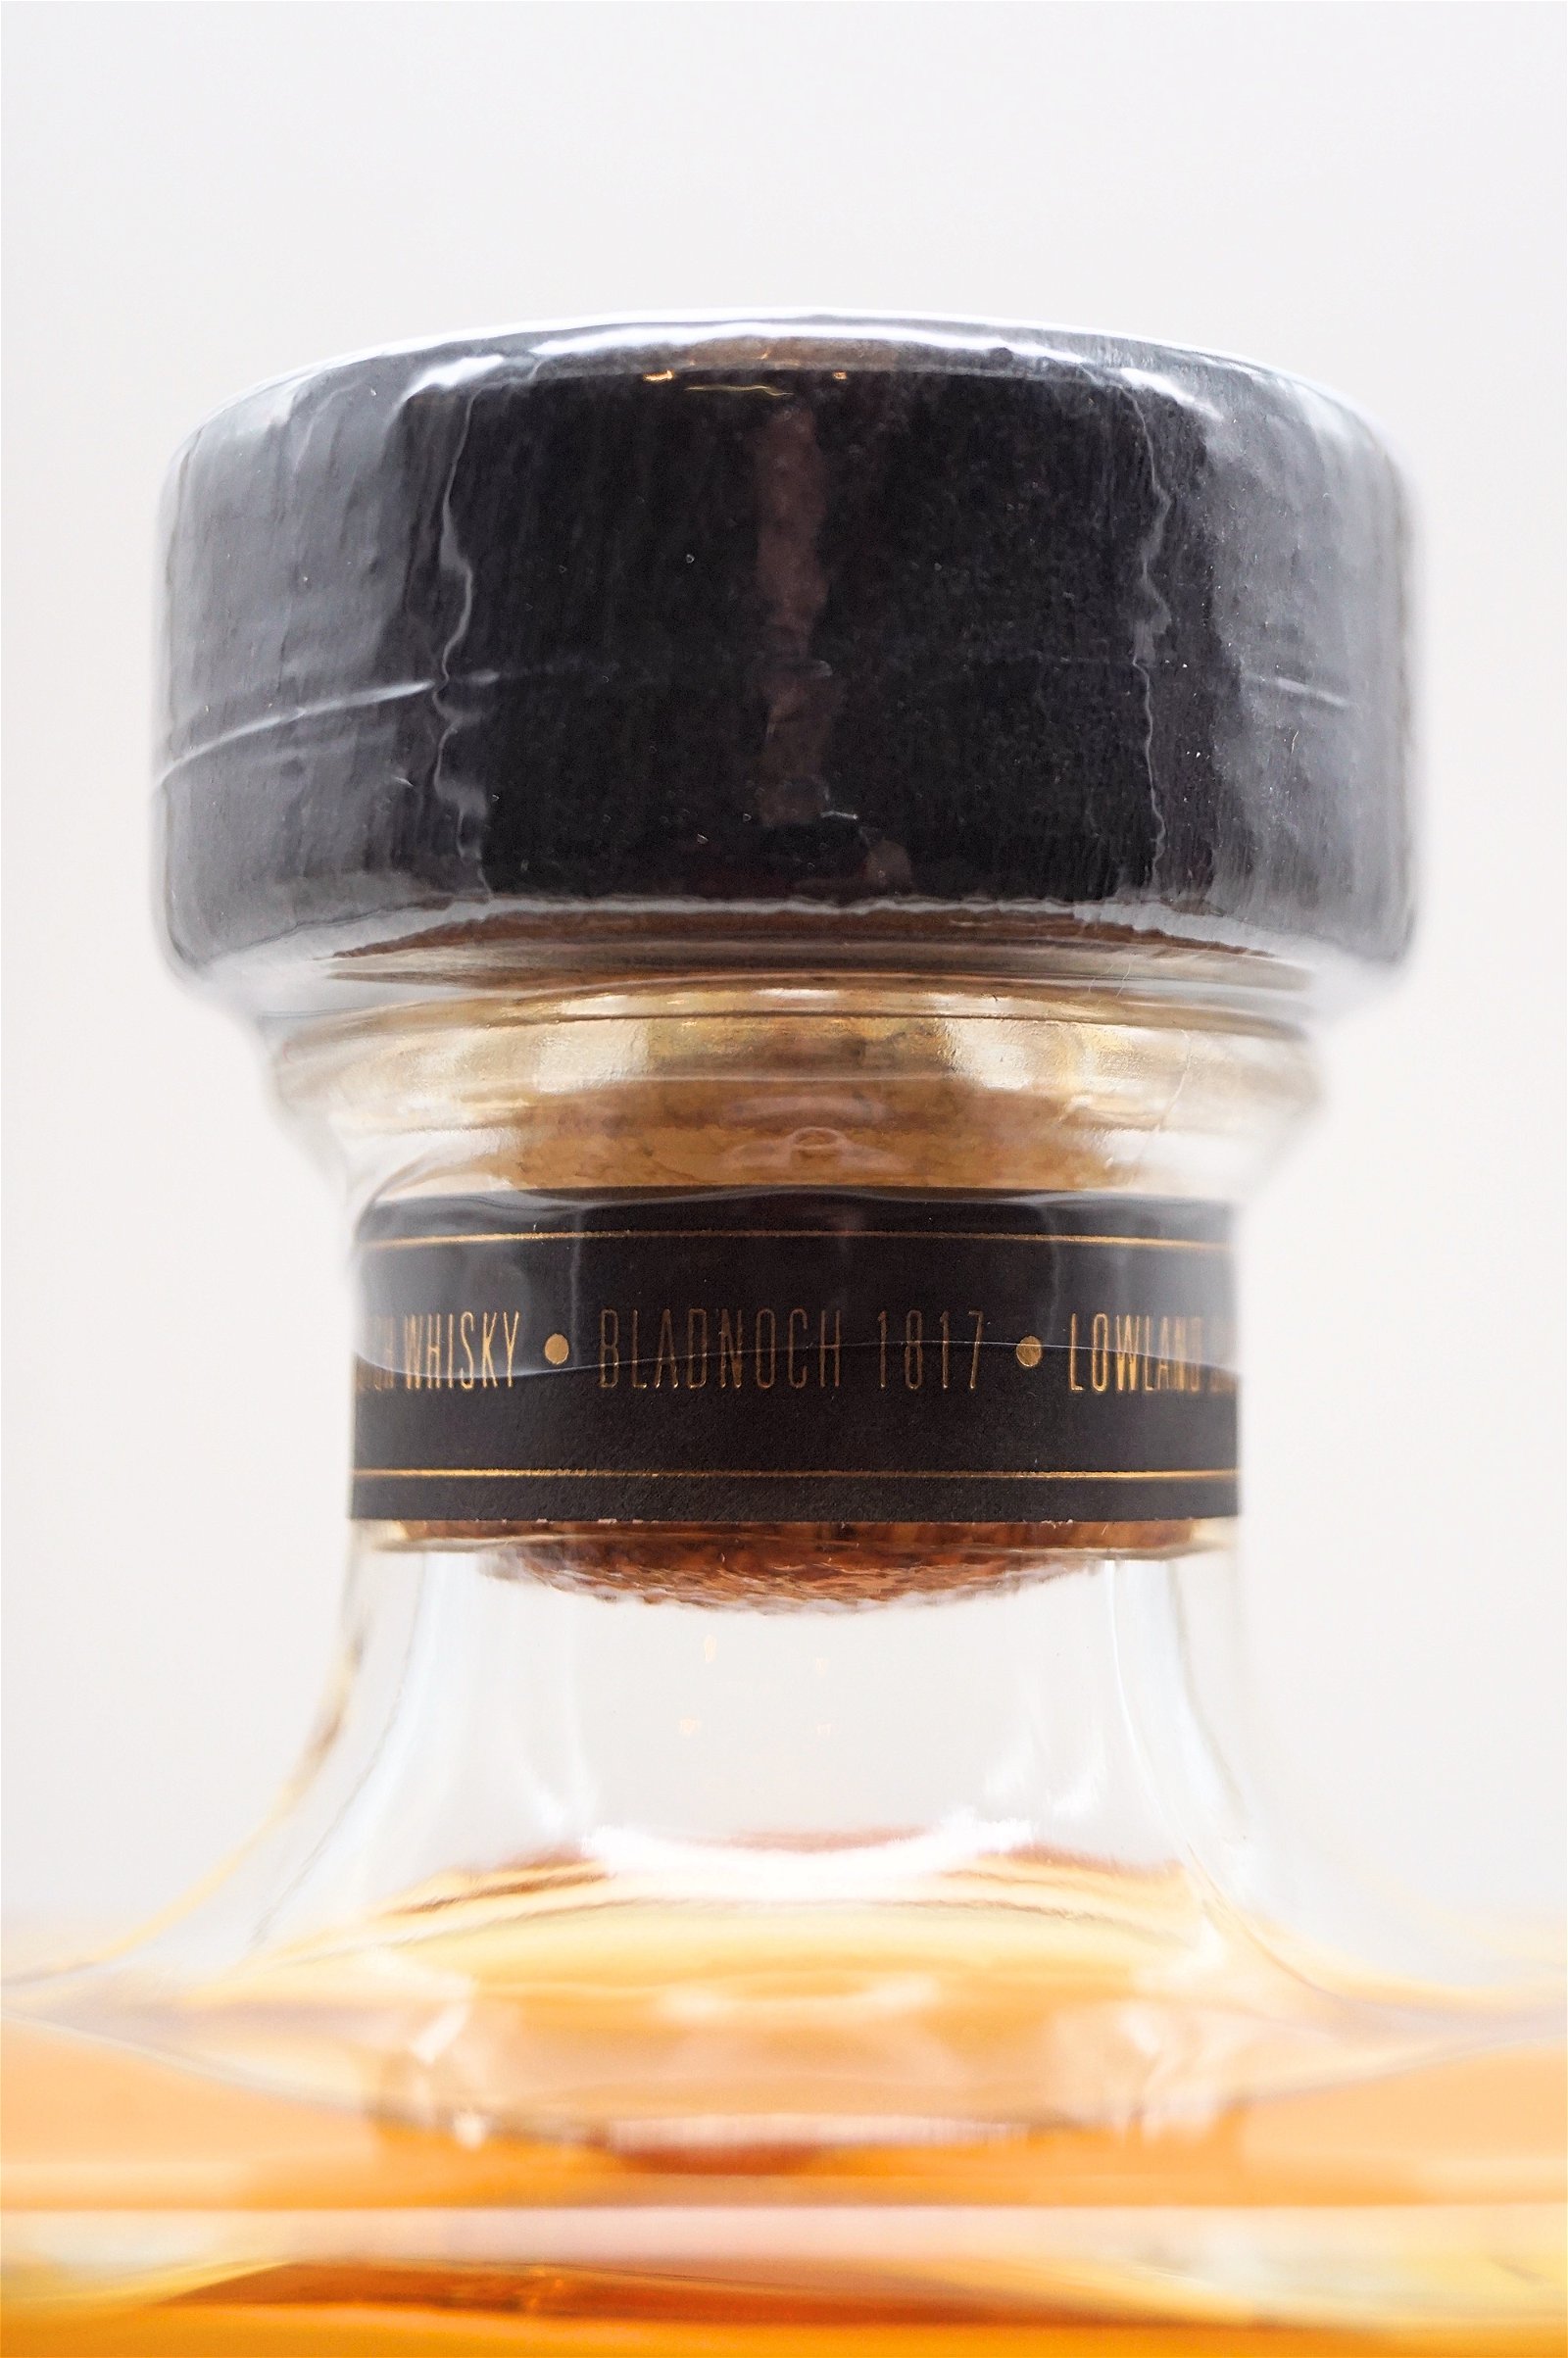 Bladnoch Vinaya Classic Collection Lowland Single Malt Scotch Whisky